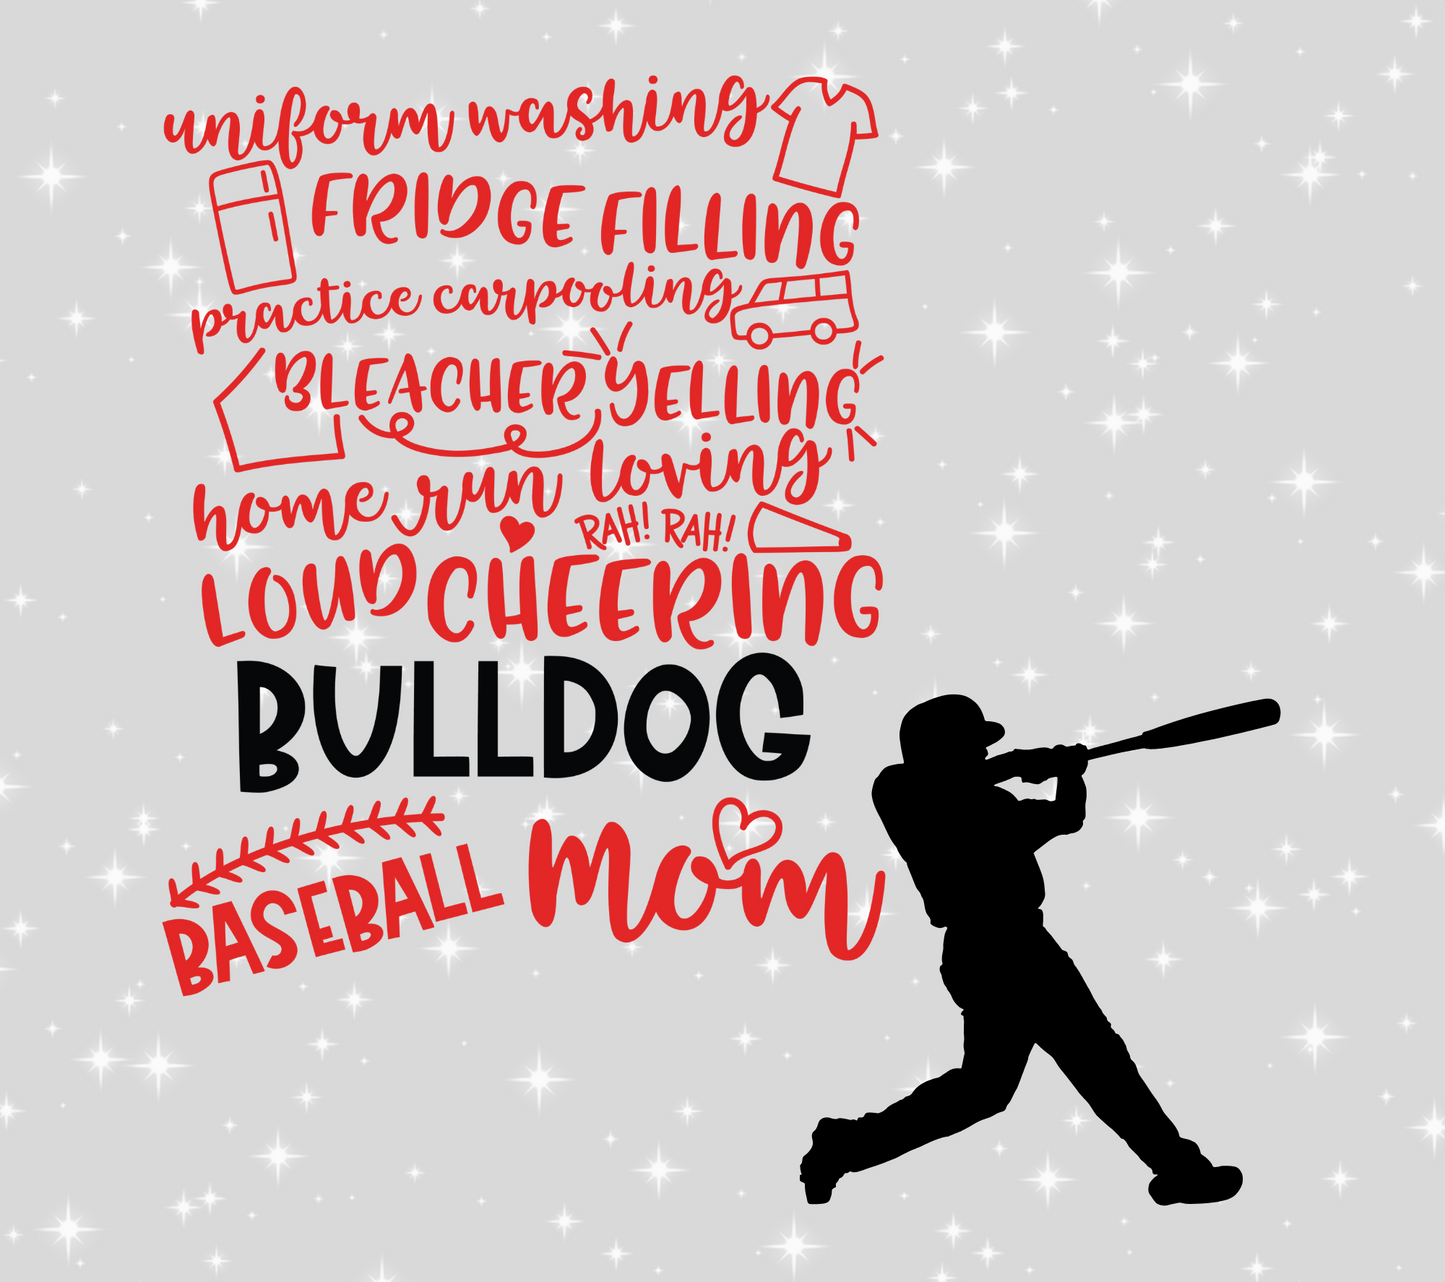 Bulldog baseball mom